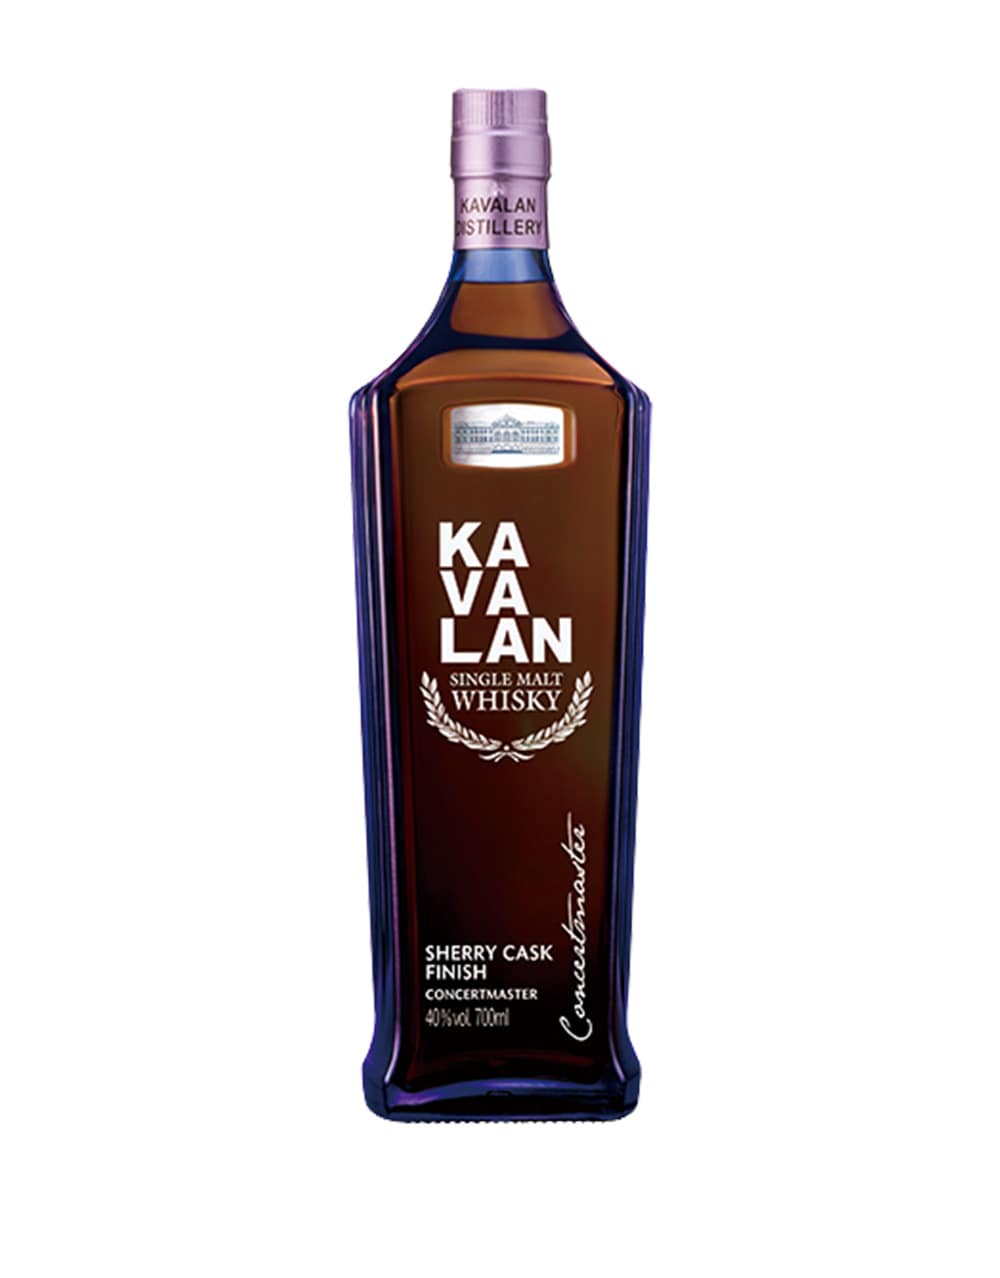 Kavalan Distillery Select Single Malt Whisky